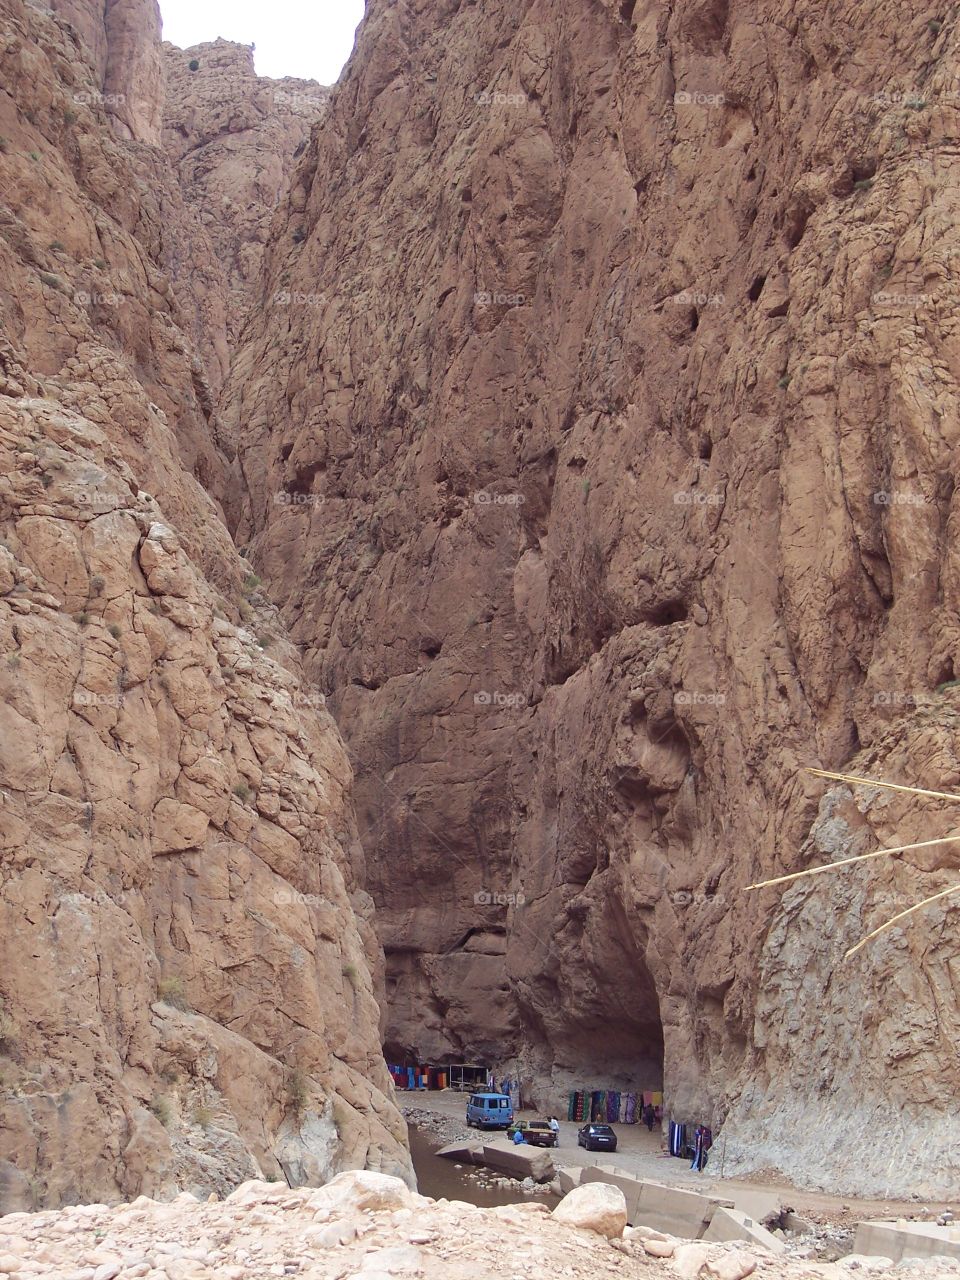 
Maroc canyon